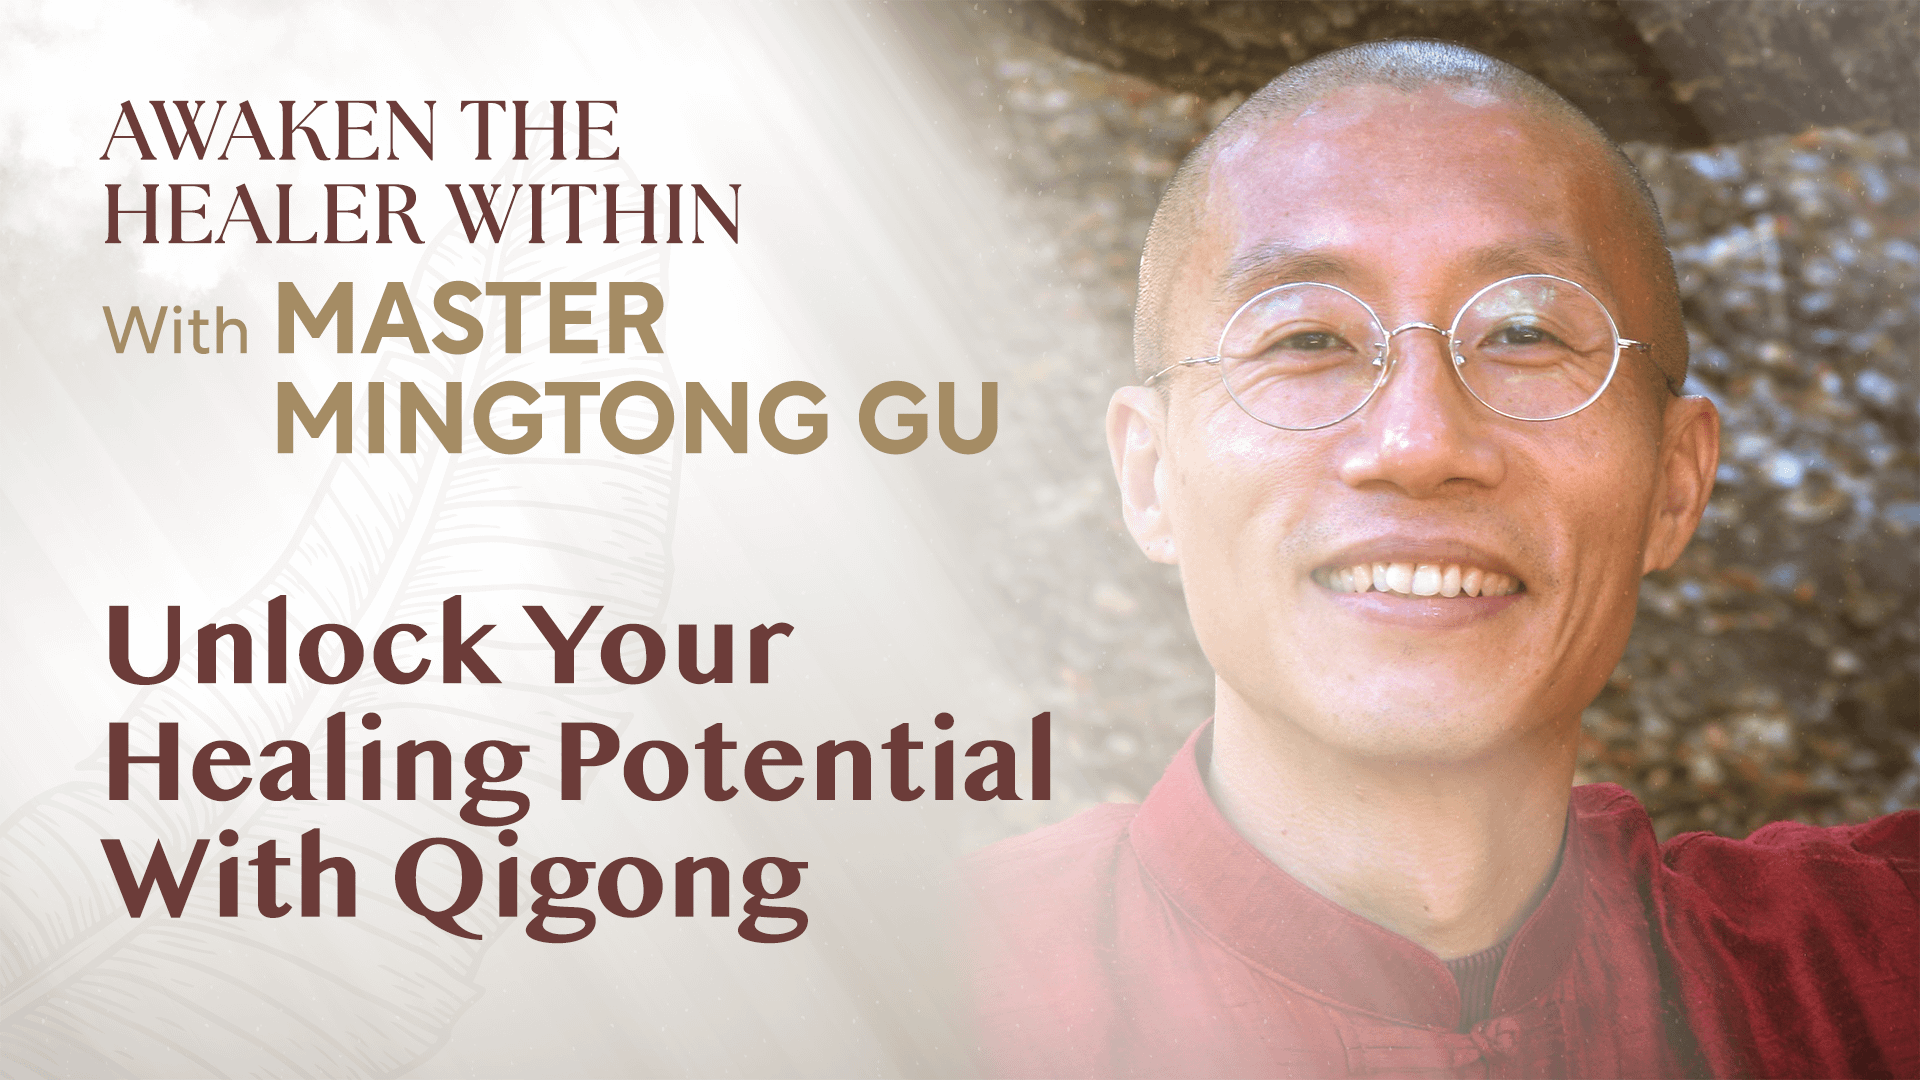 Unlock Your Healing Potential With Qigong